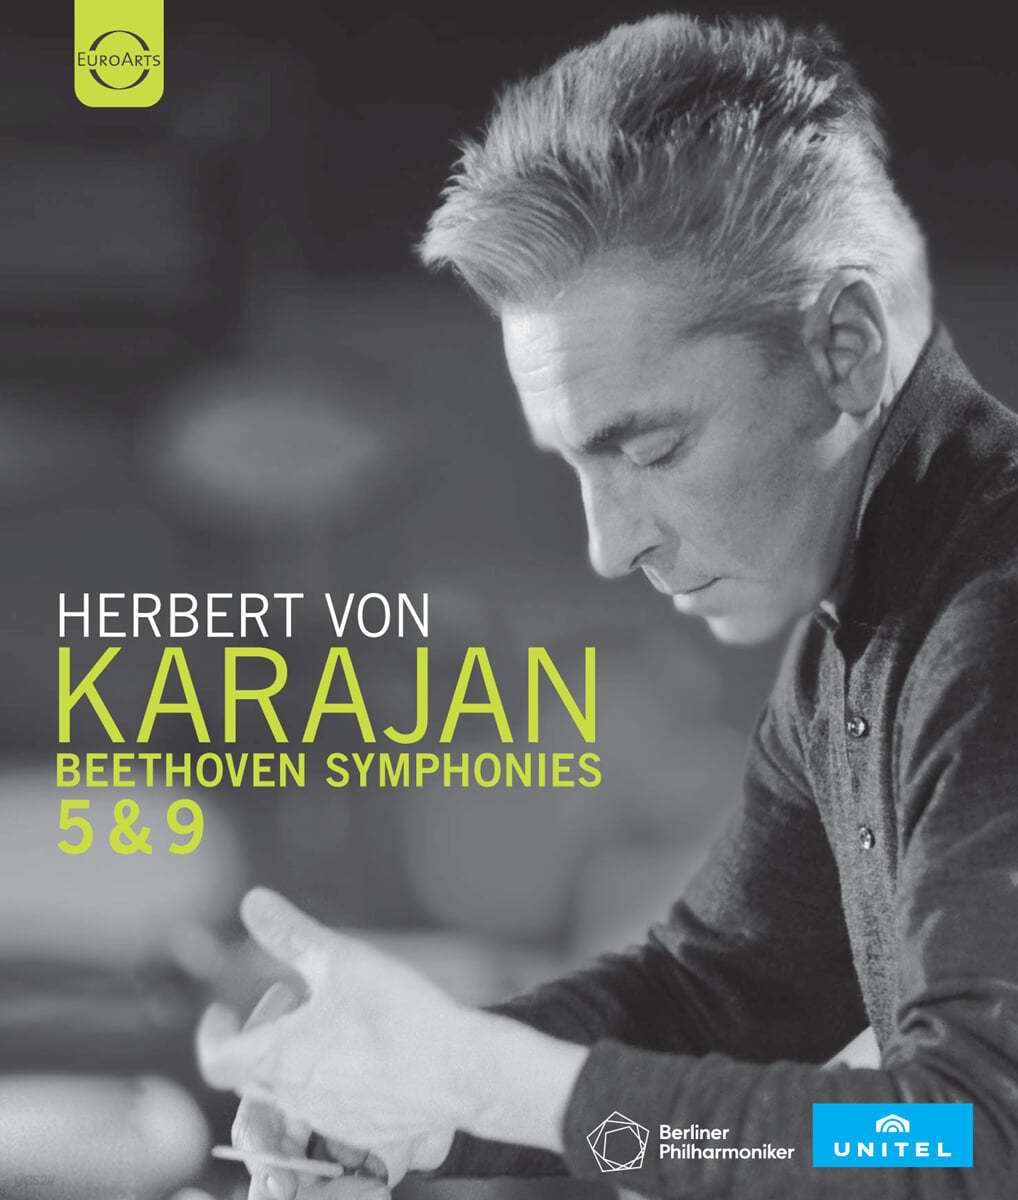 Herbert von Karajan 베토벤: 교향곡 5번 9번 ‘합창’ - 헤르베르트 폰 카라얀 (Beethoven: Symphonies 5 &amp; 9) 